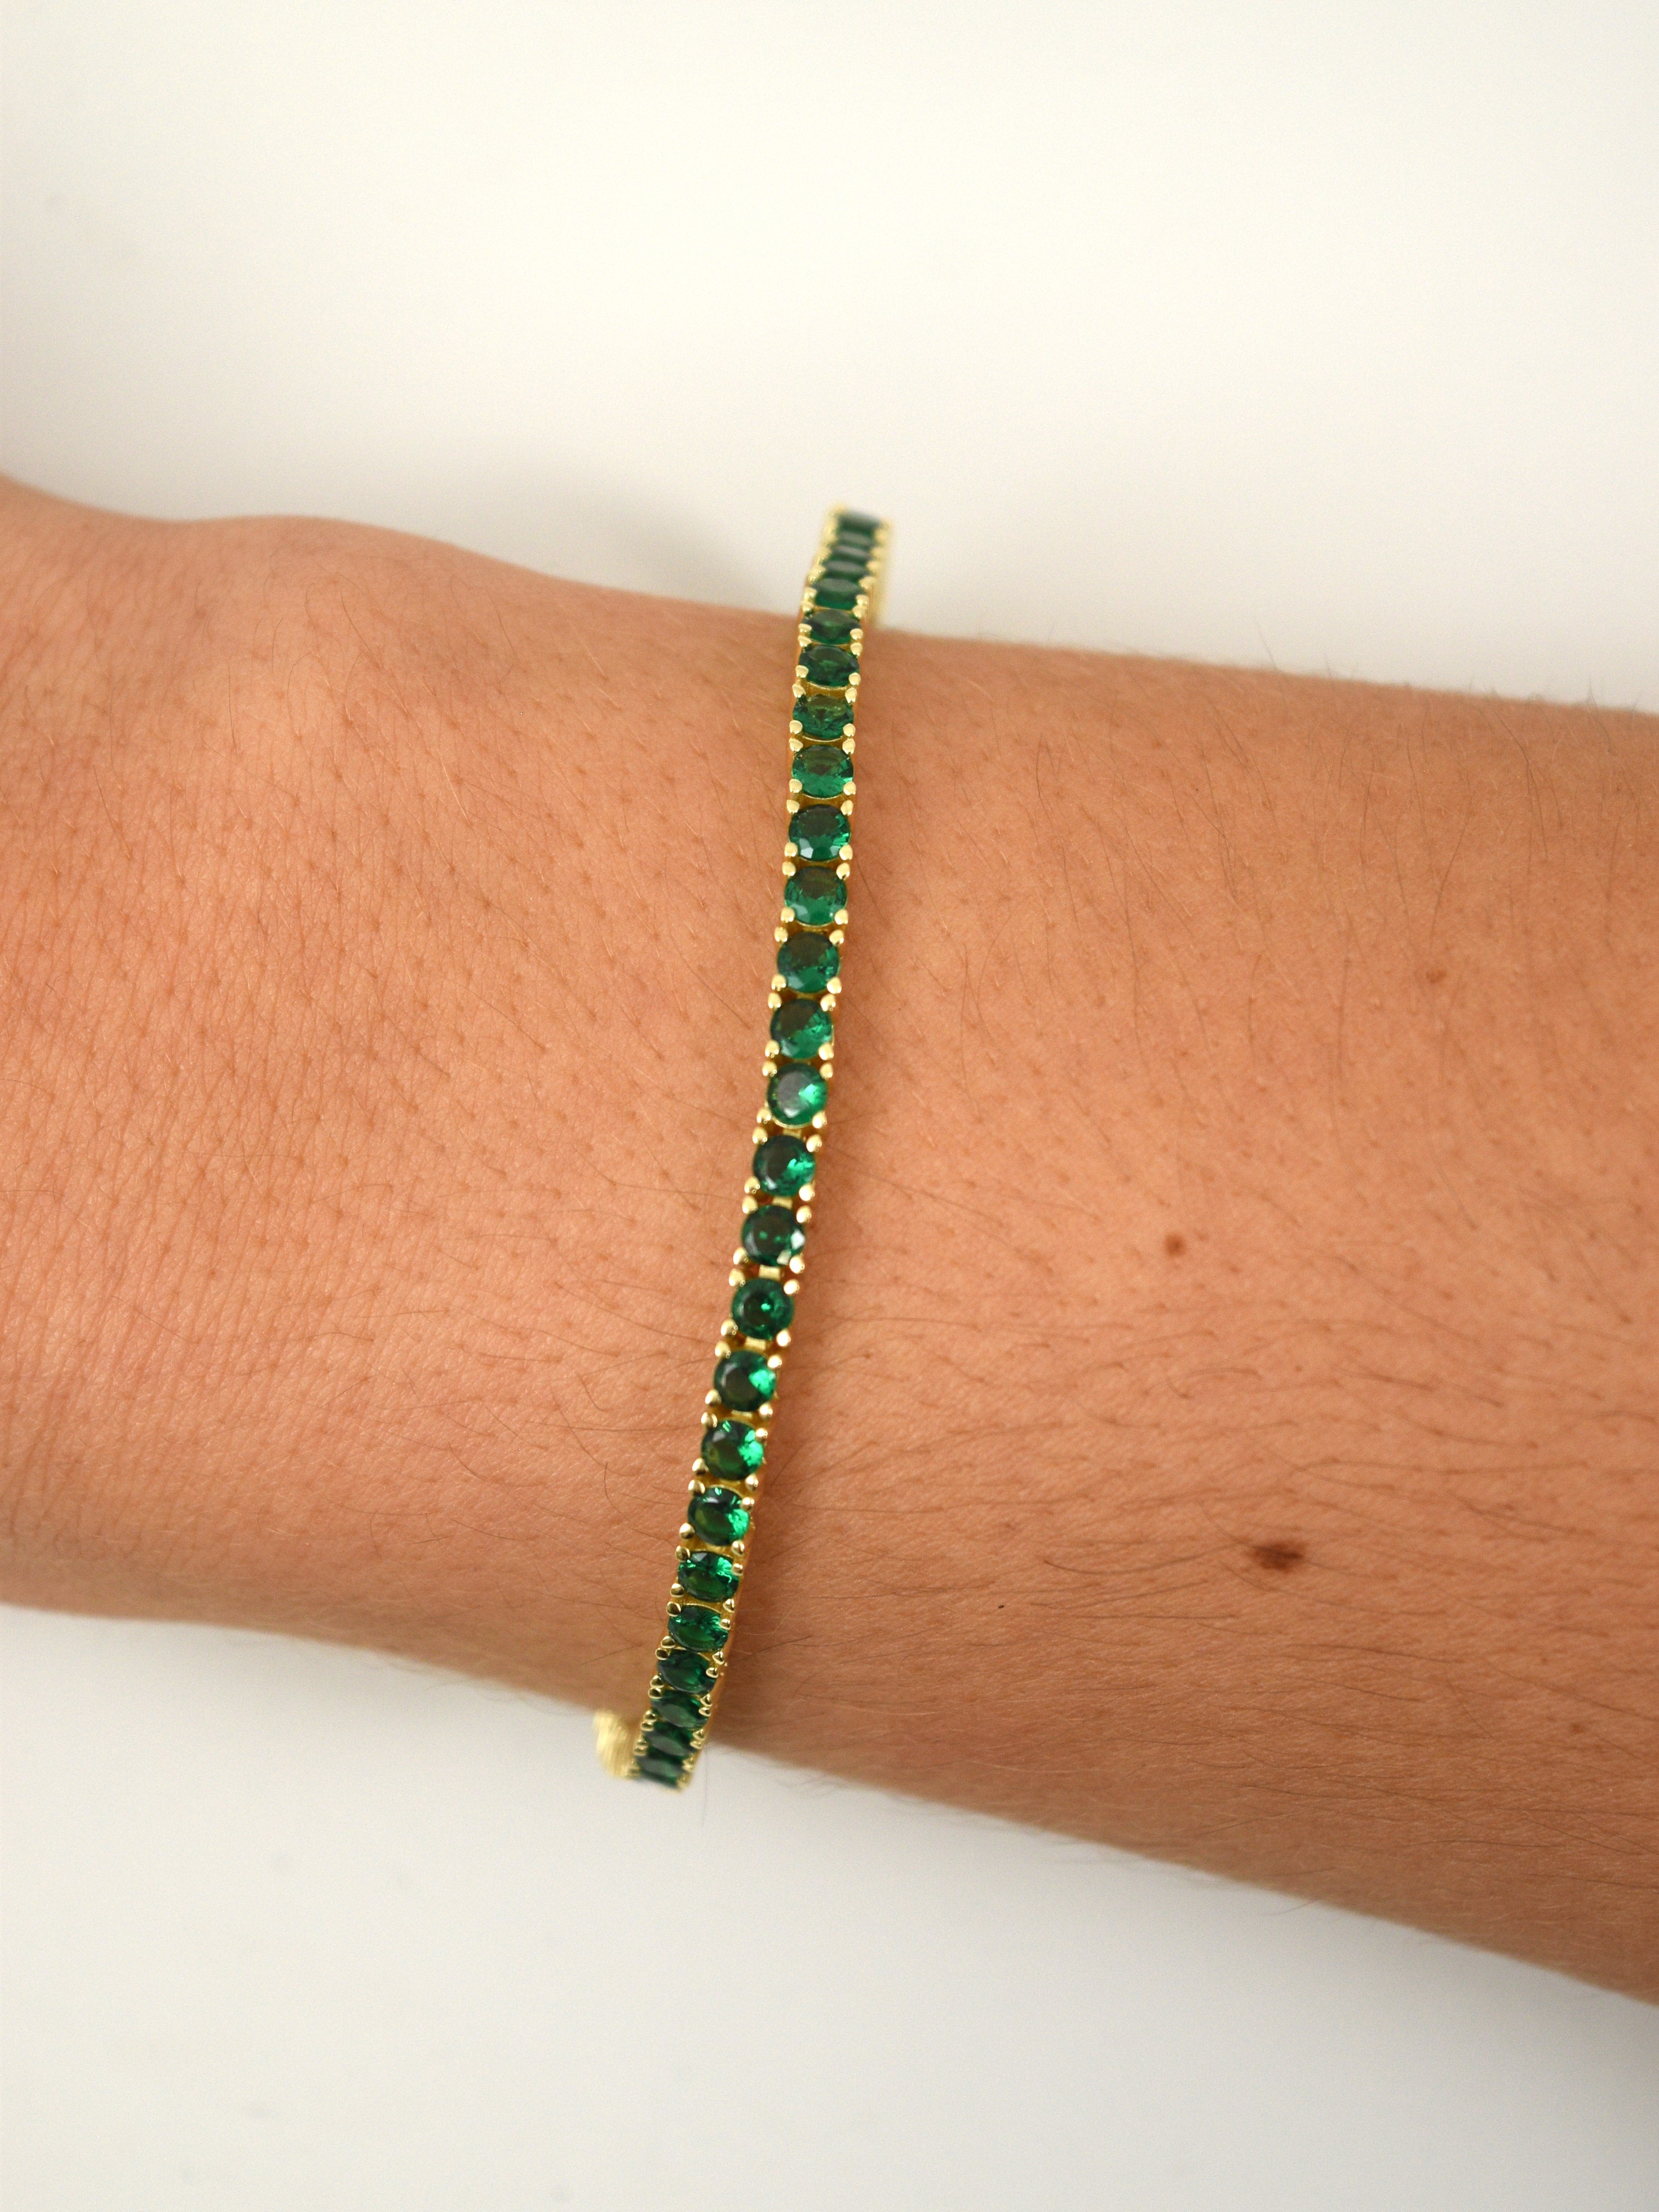 Starla Tennis Bracelet in Green Crystals